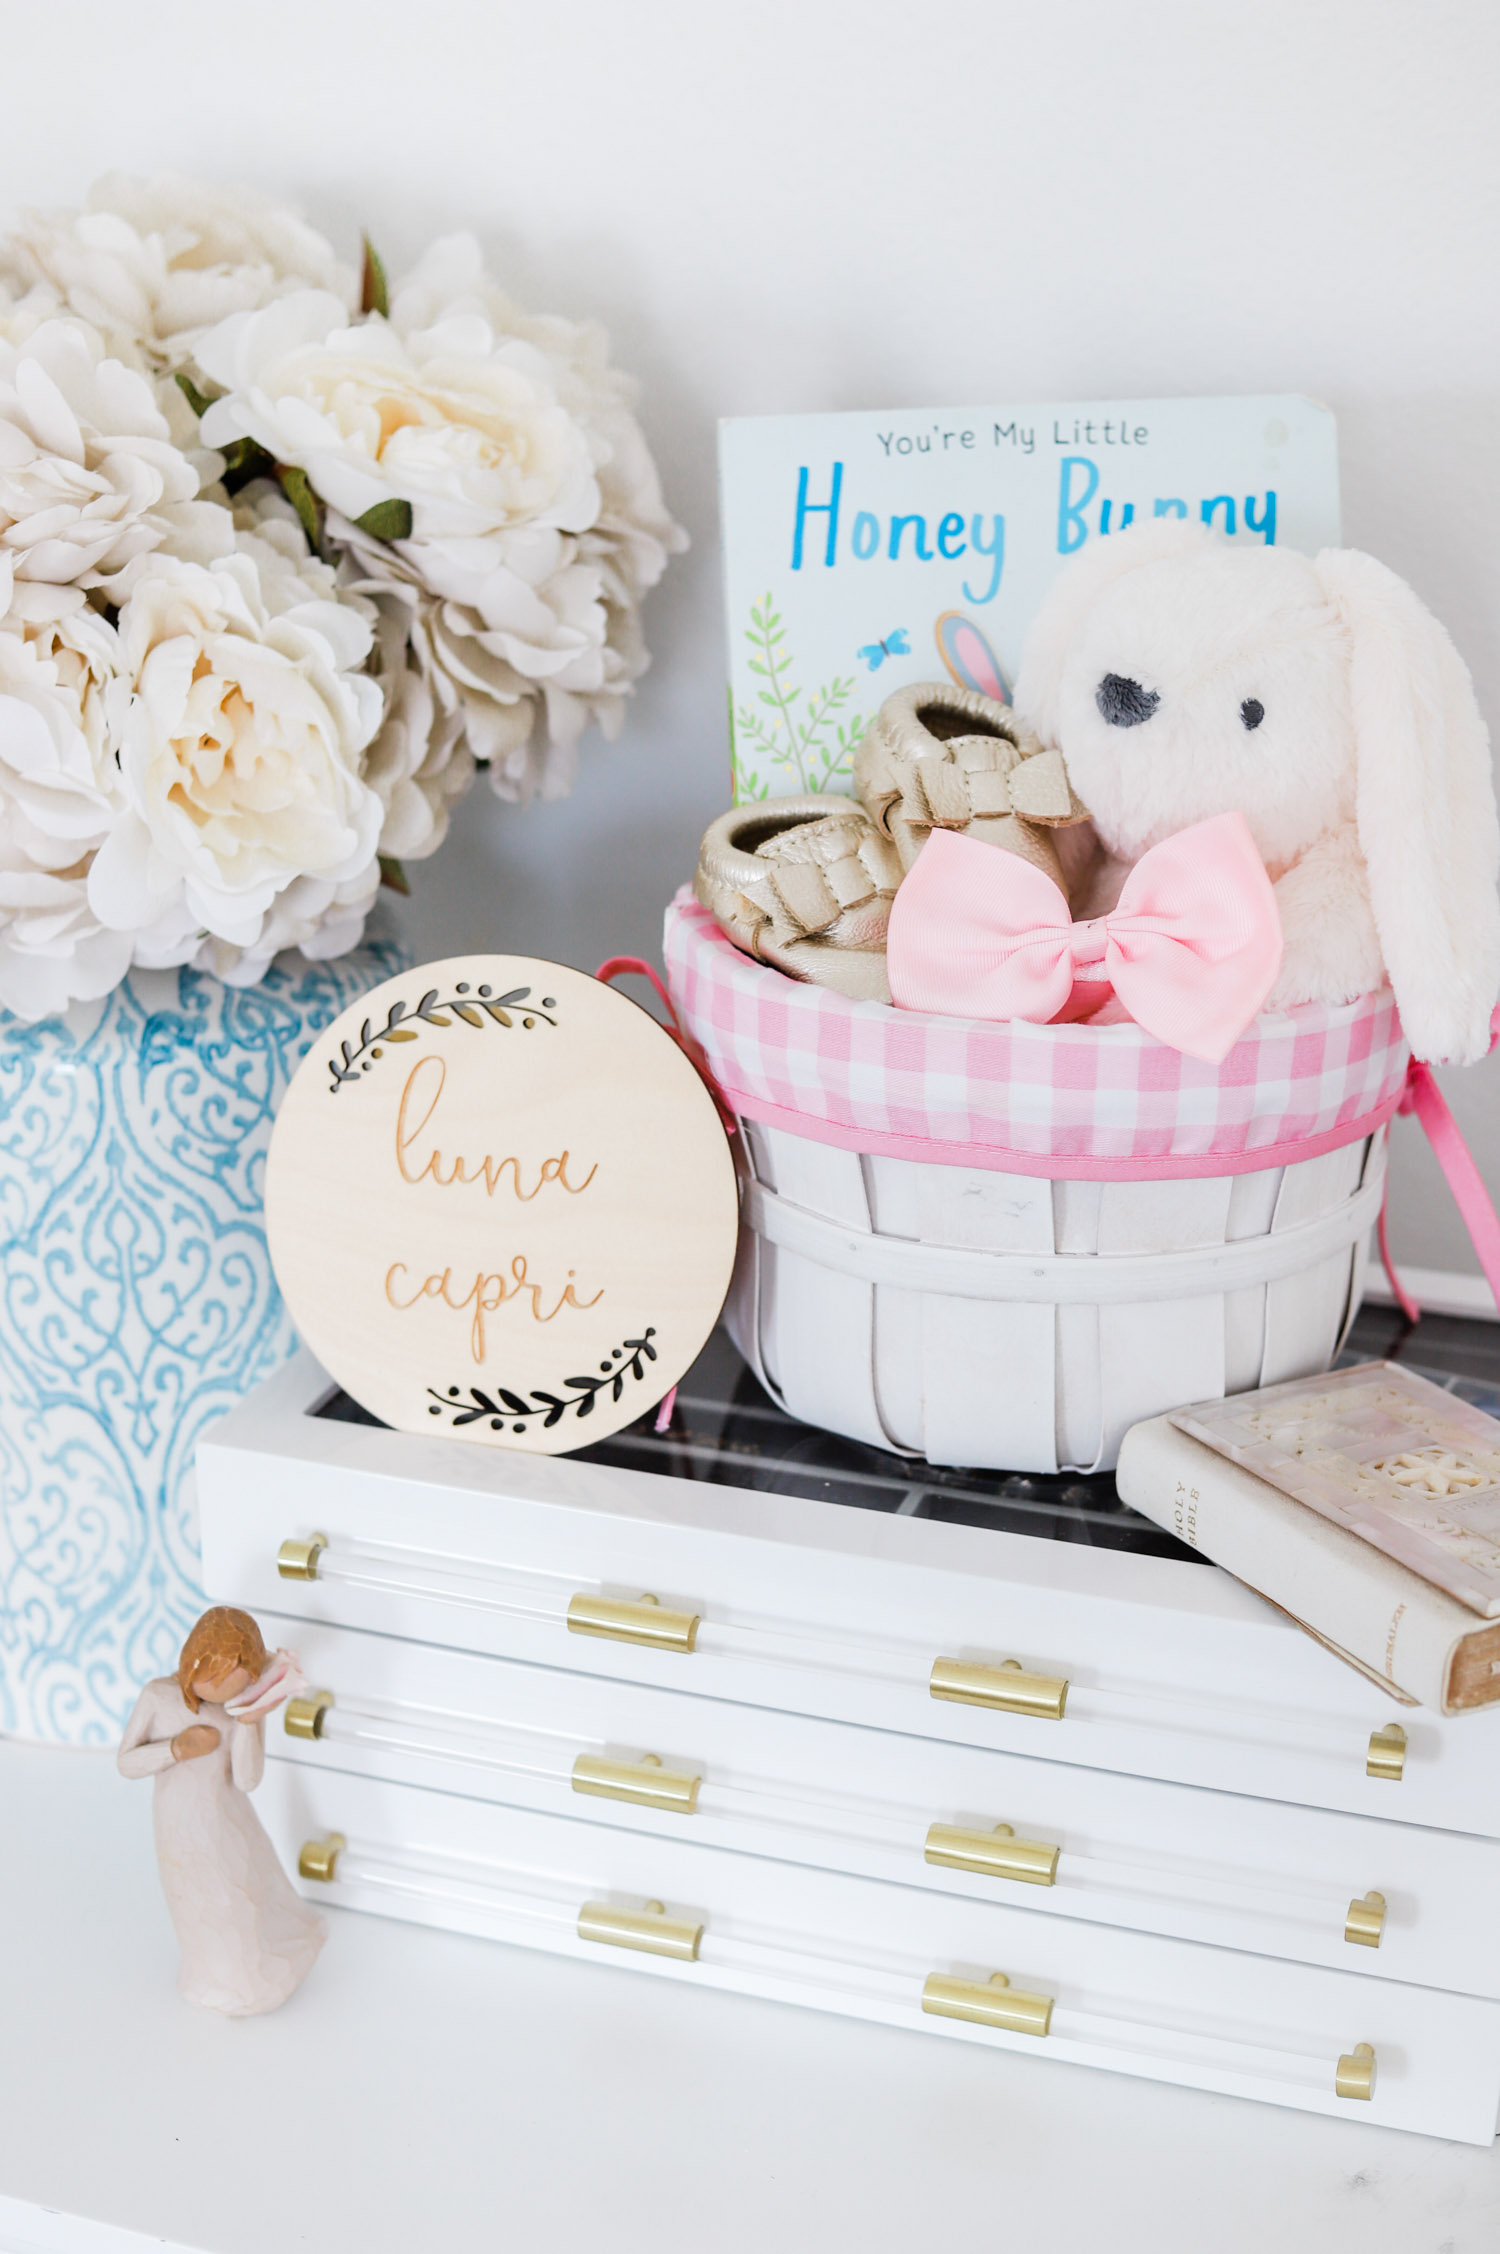 How To Make A DIY Gift Basket - Ashley Brooke